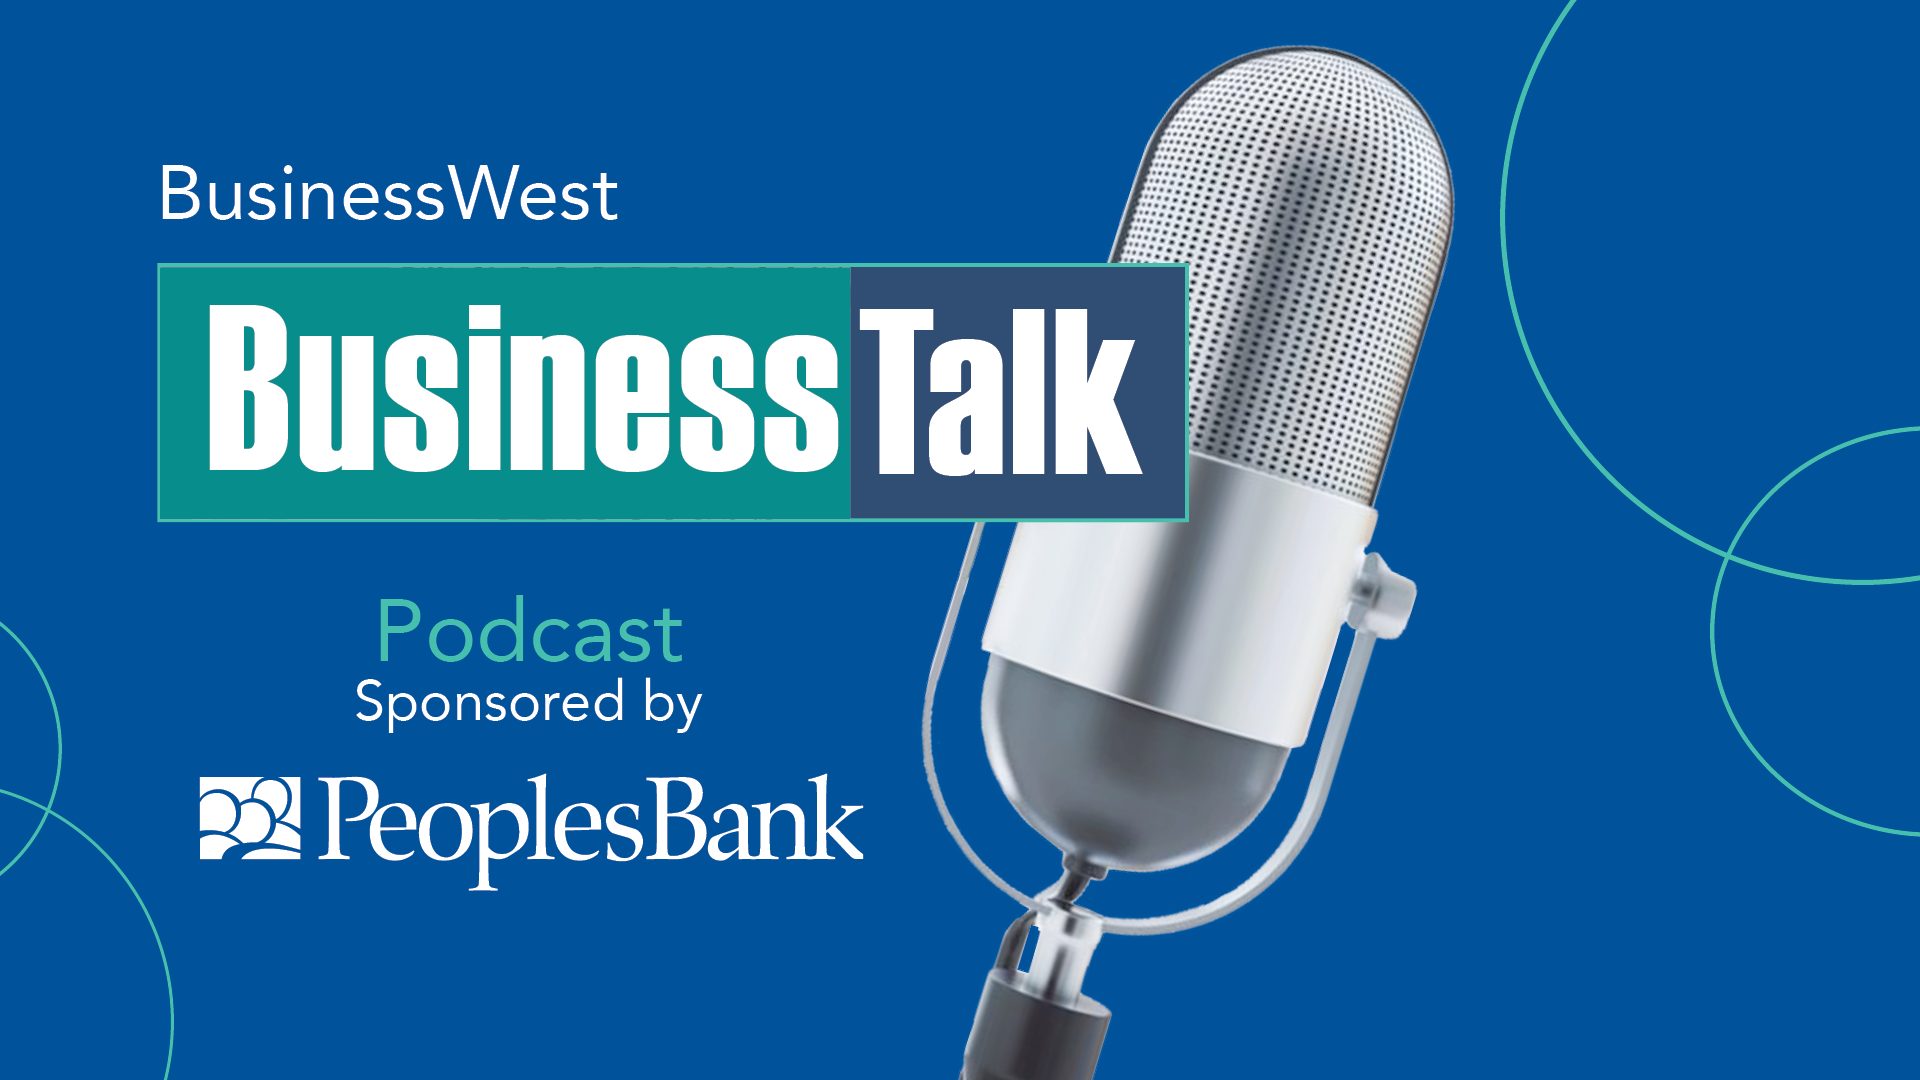 BusinessTalk Podcast Series - BusinessWest